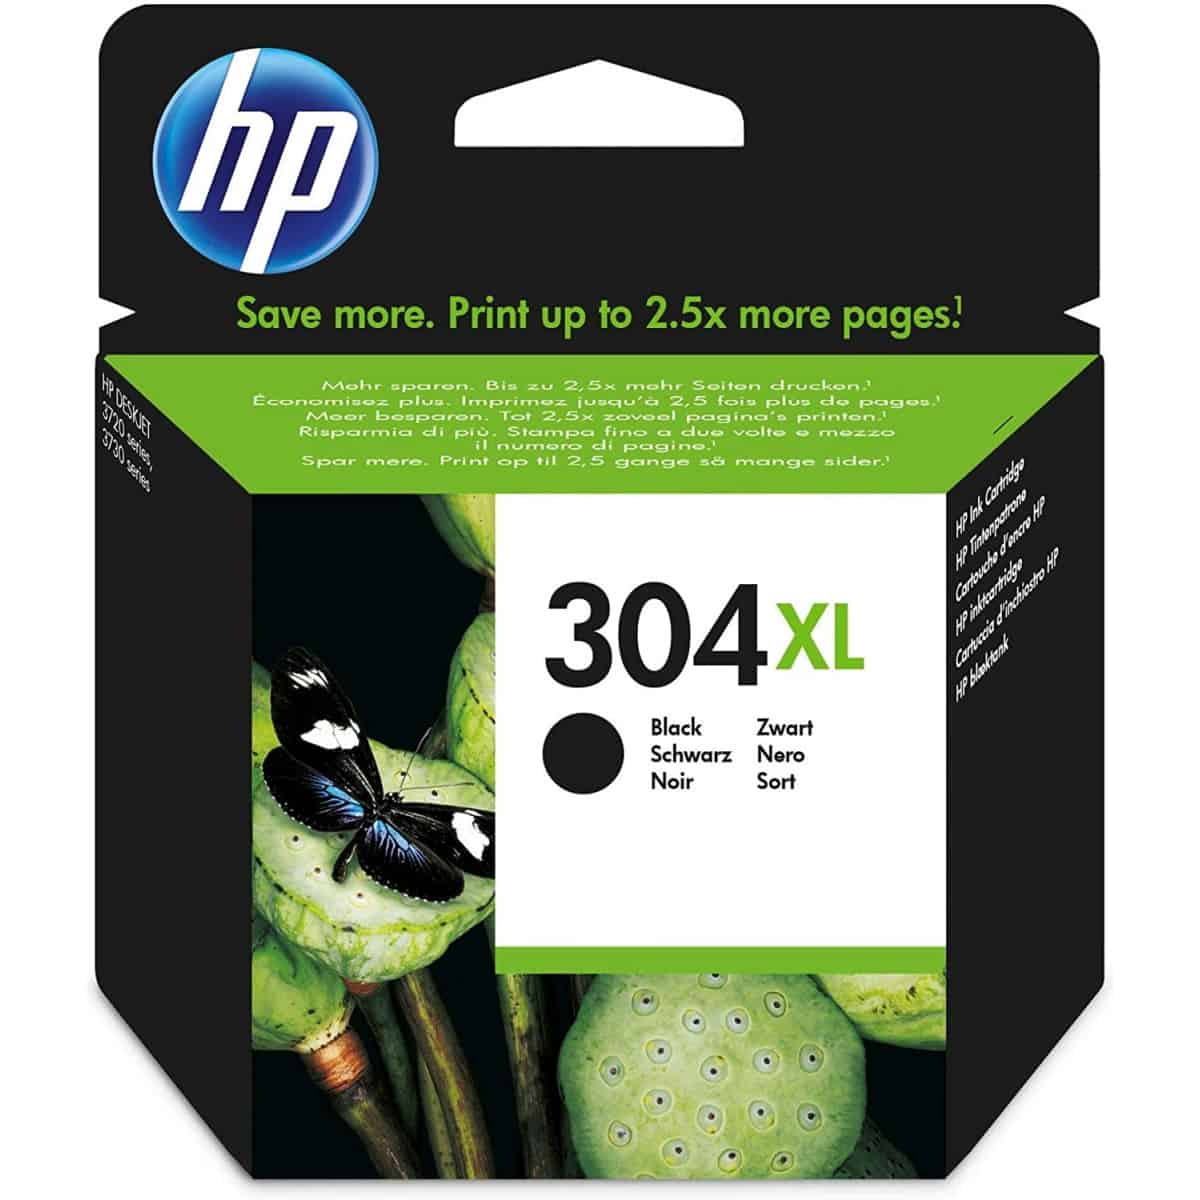 Cartouche HP 305 couleur d'encre origine (3YM60AE) - Tabtel